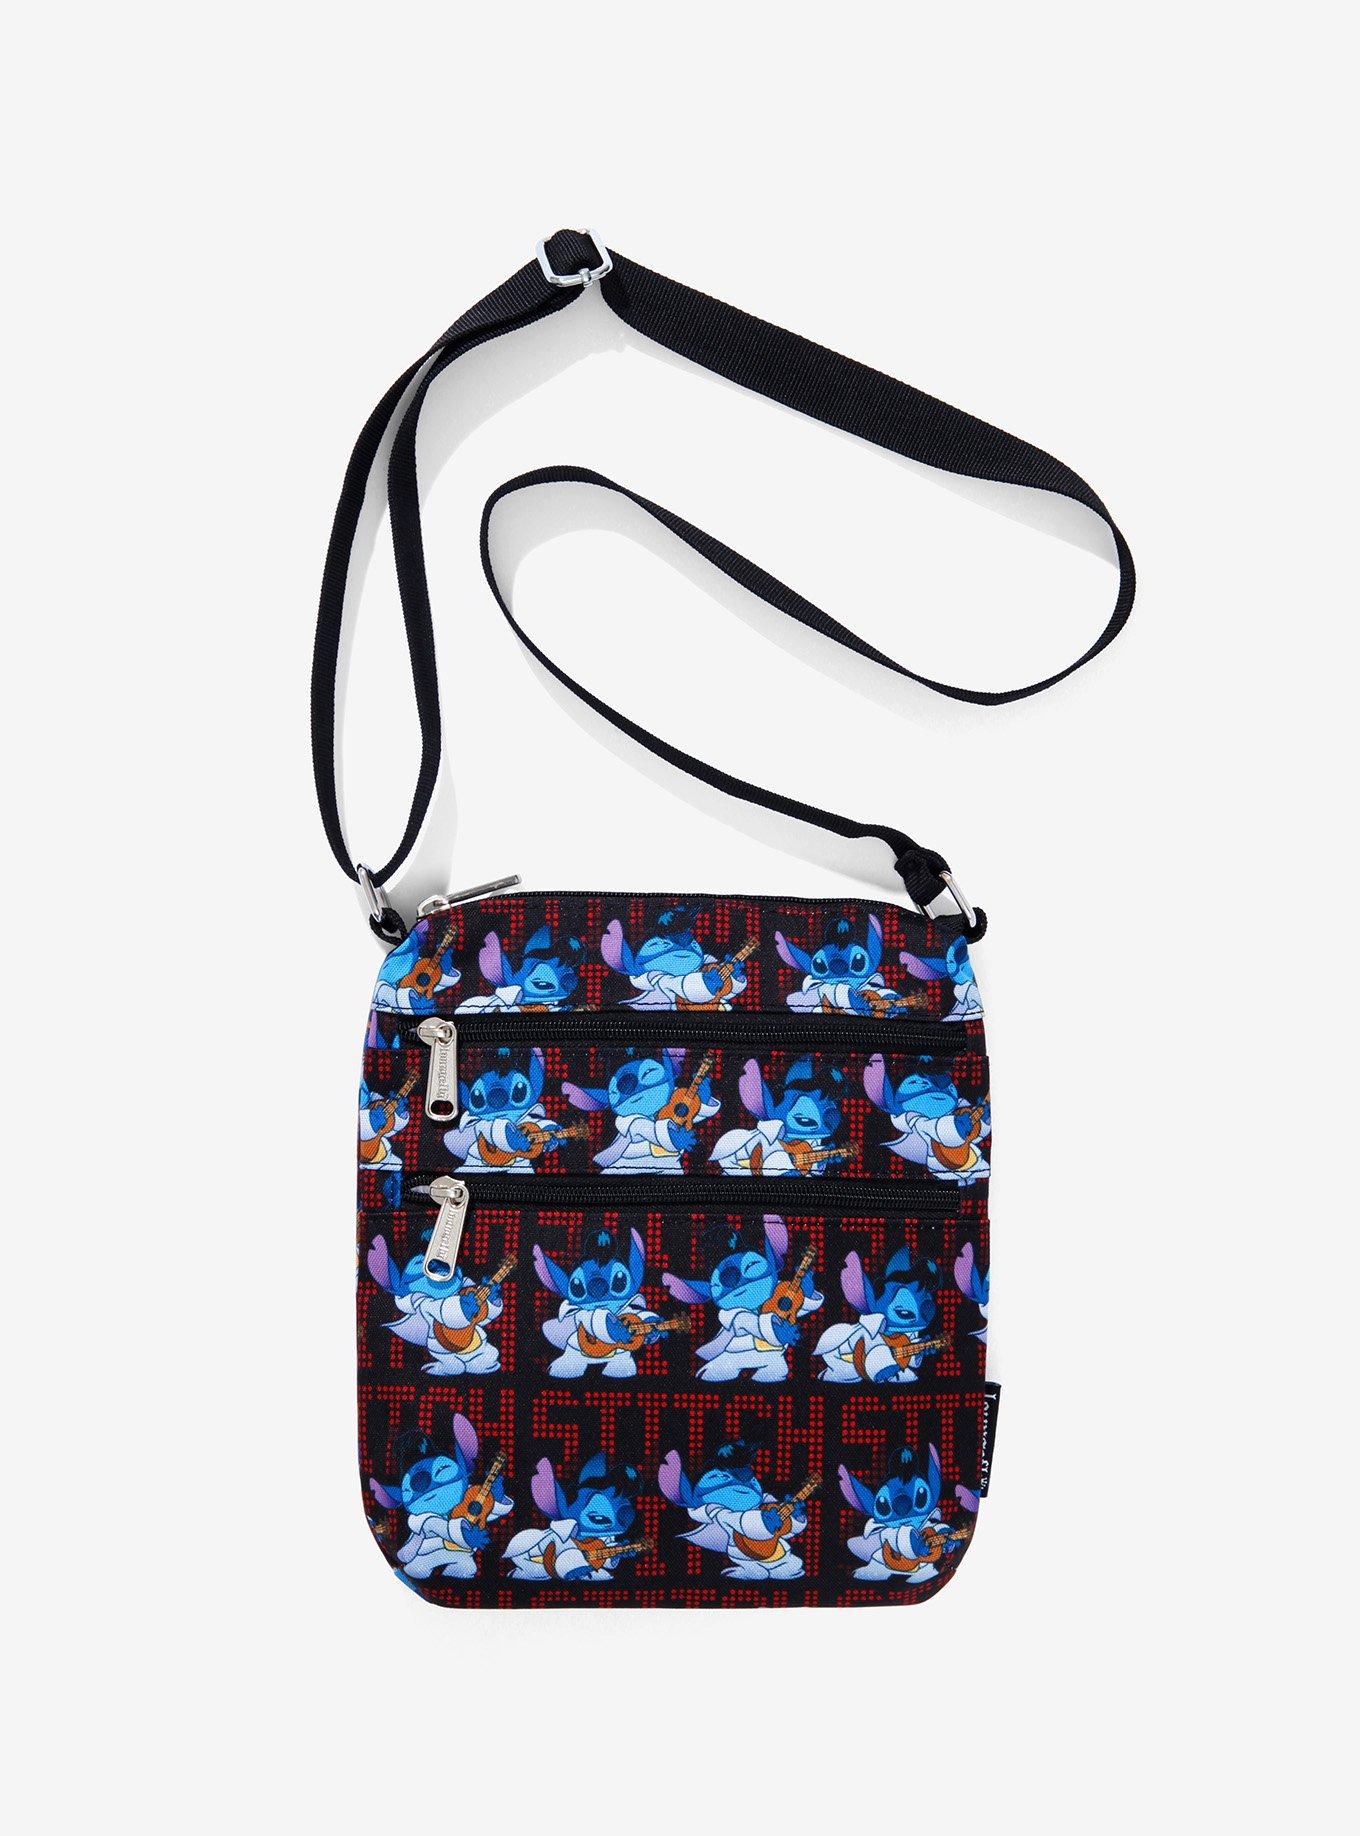 2psc Fashion Chians Shoulder Bag Women Nylon Chians Crossbody Bag